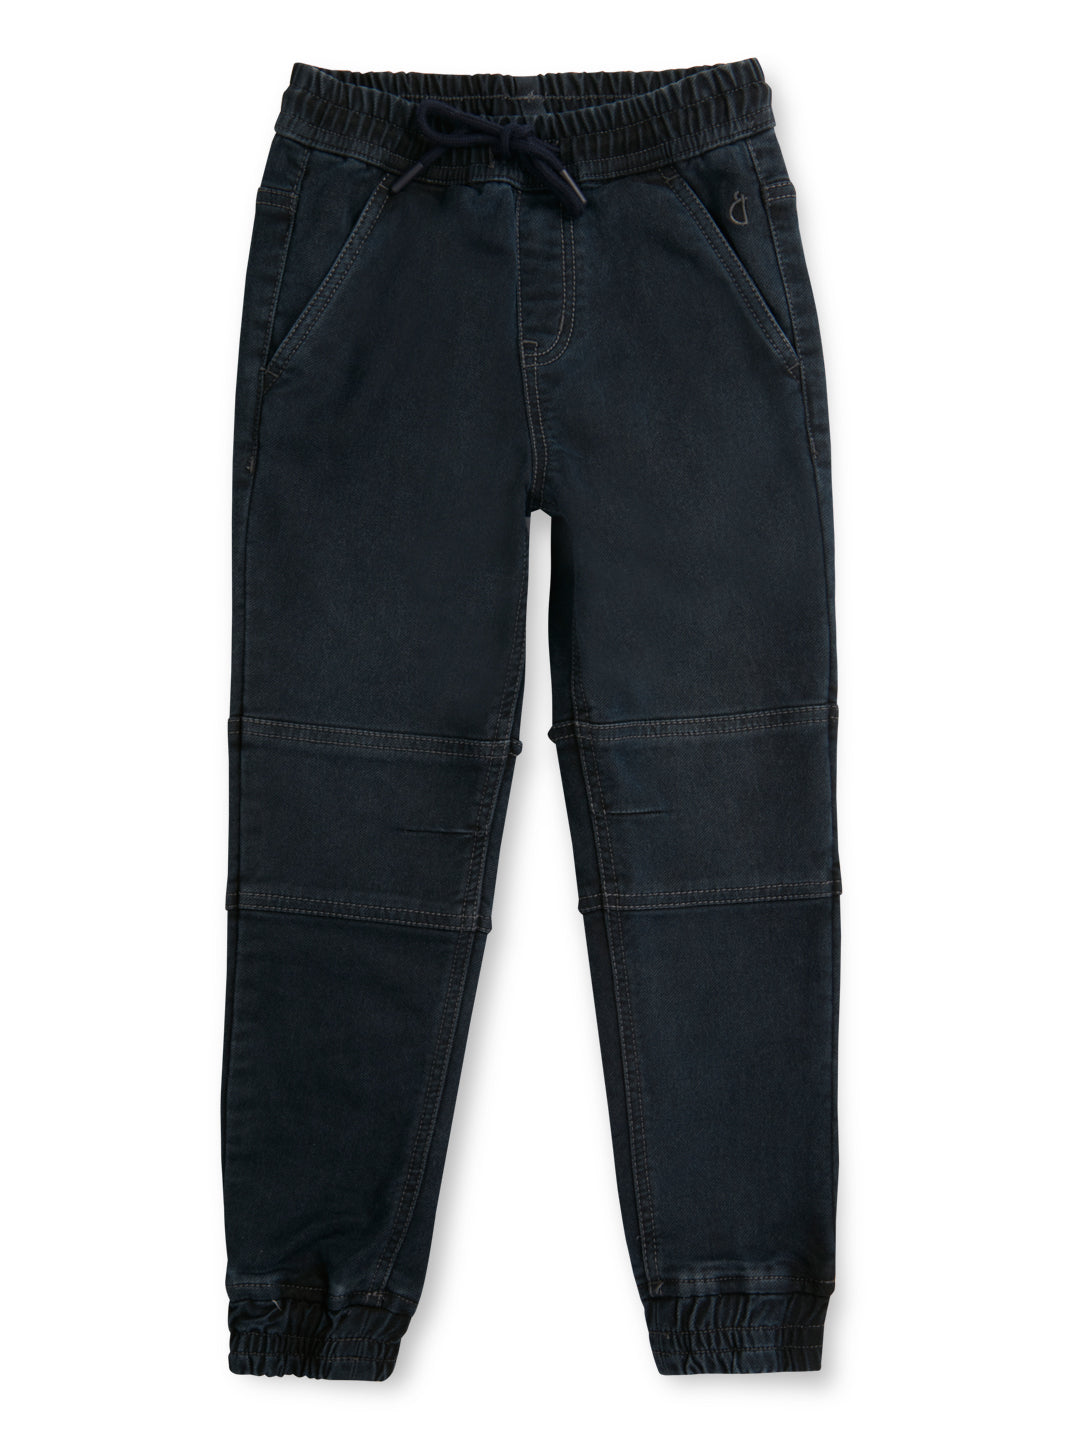 Boys Black Solid Denim Elasticated Jeans